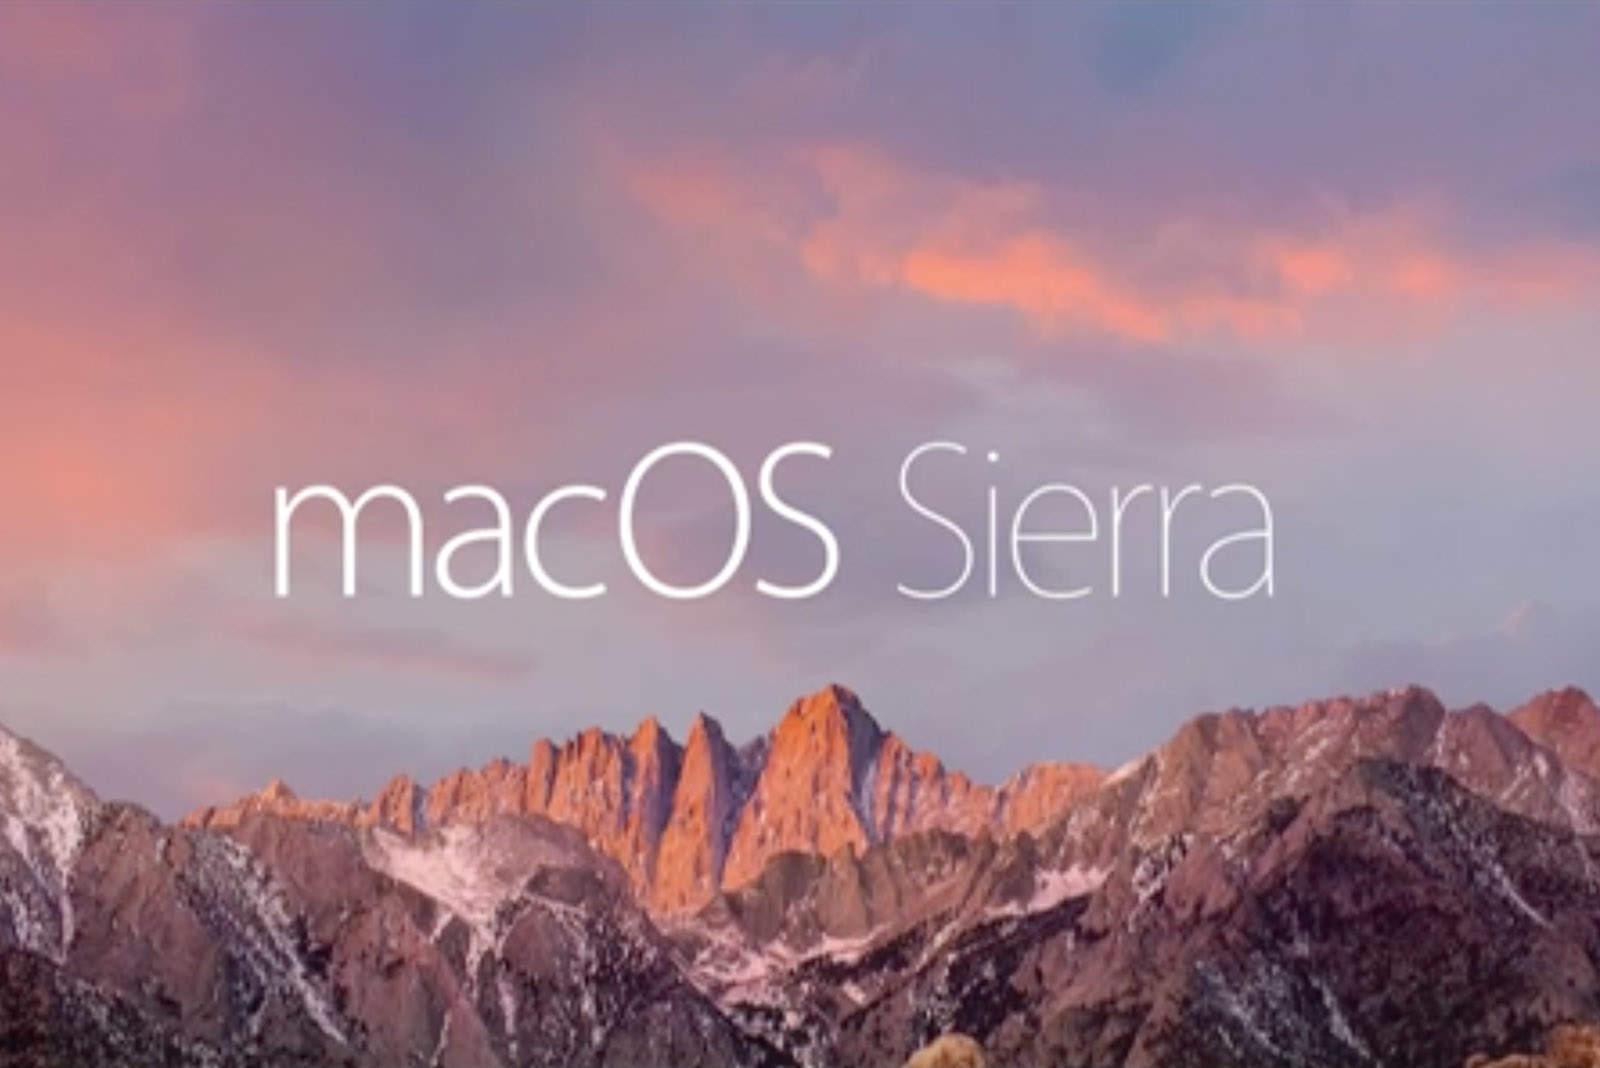 High Sierra for mac download